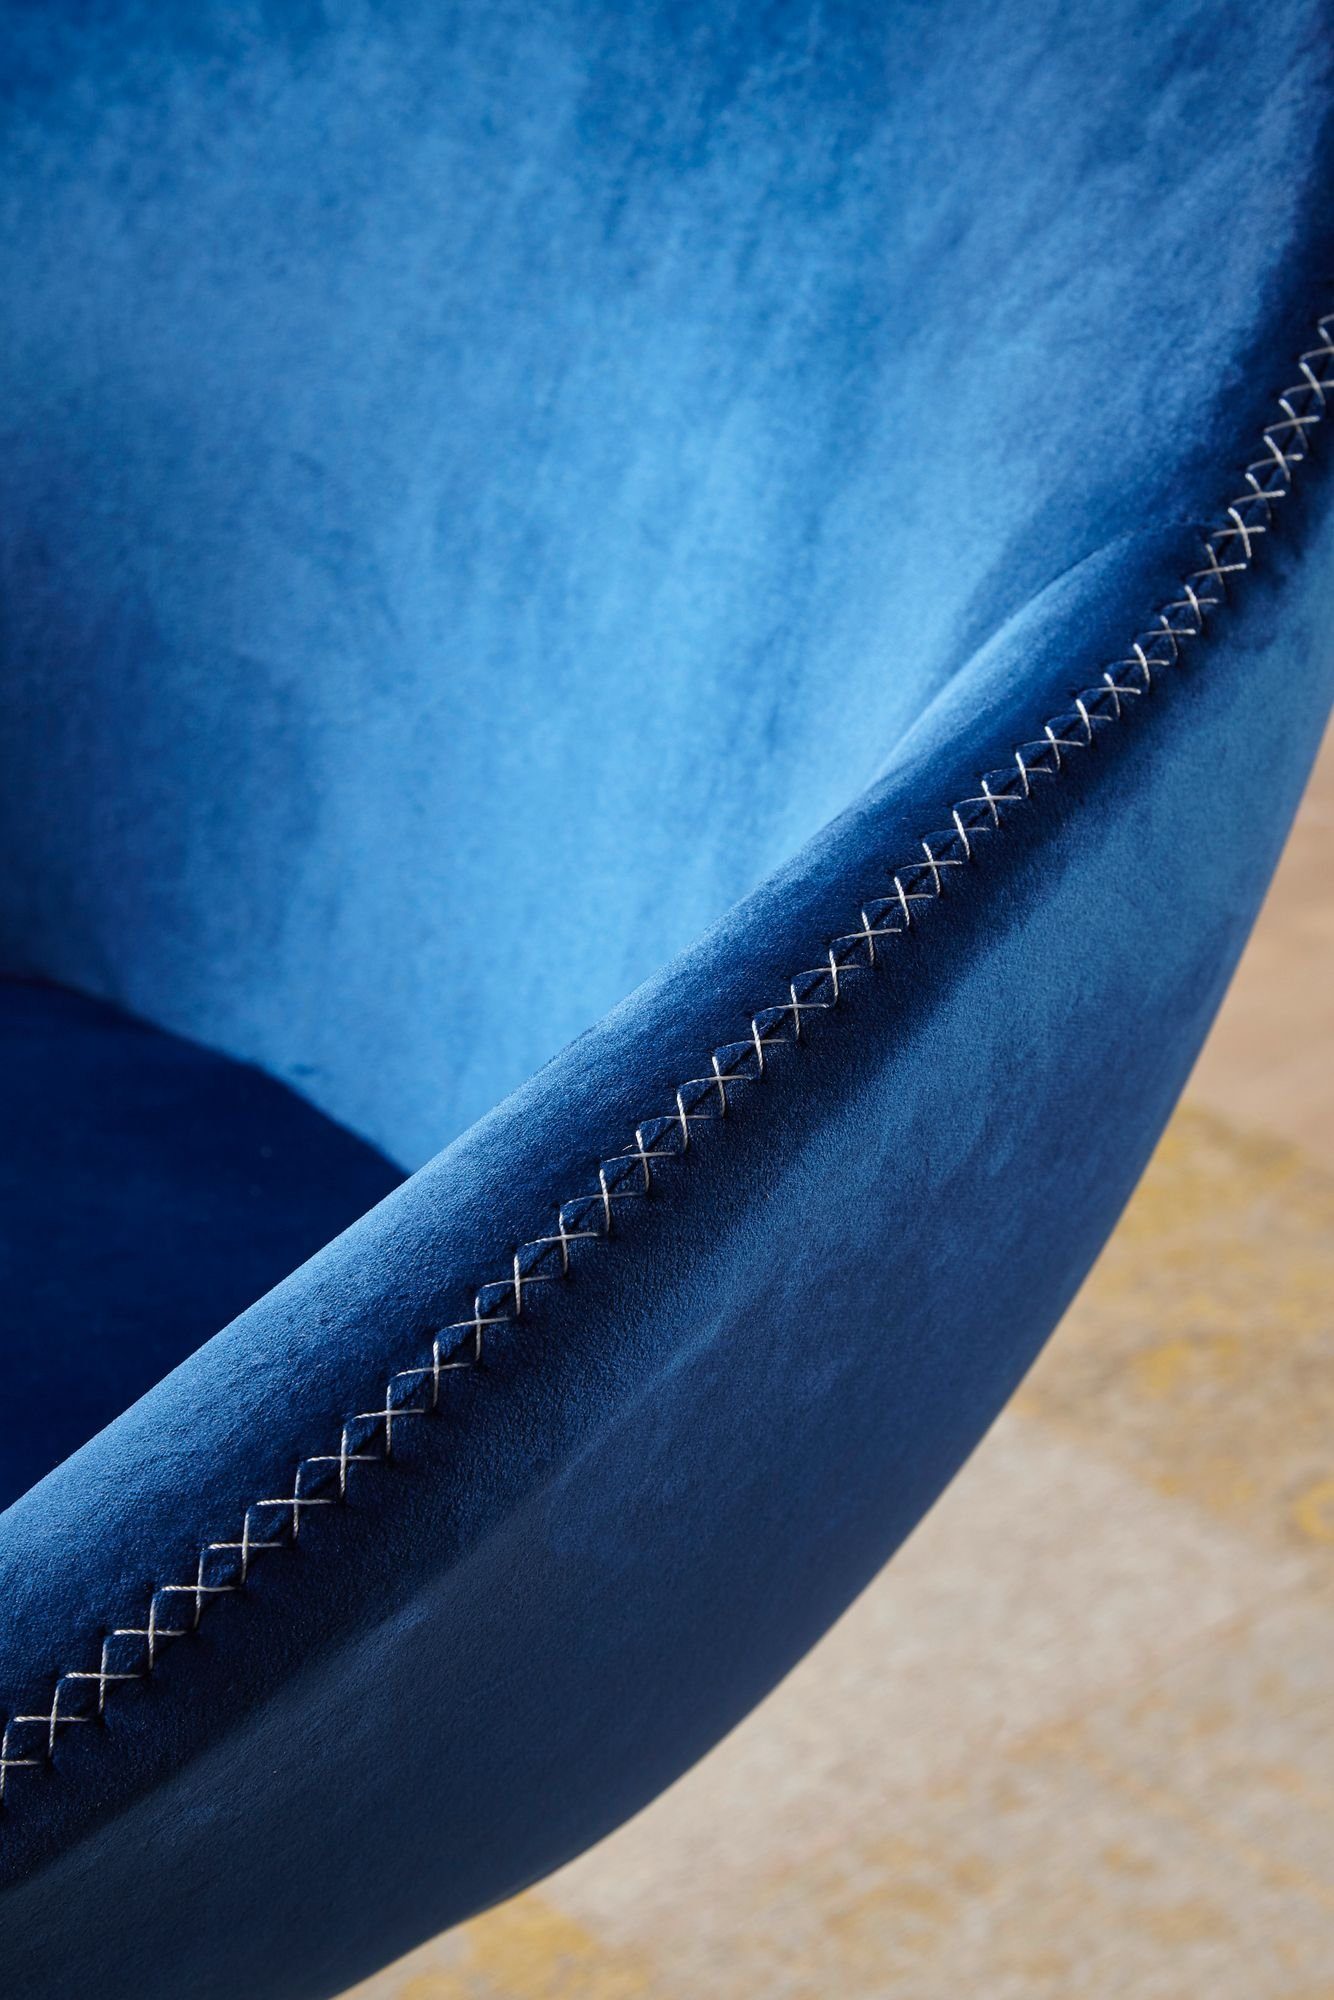 | Blau Luftsessel Entspannung, Blau Bequemer ultimative für Drehbar | Sessel KADIMA Blau - Loungesessel DESIGN